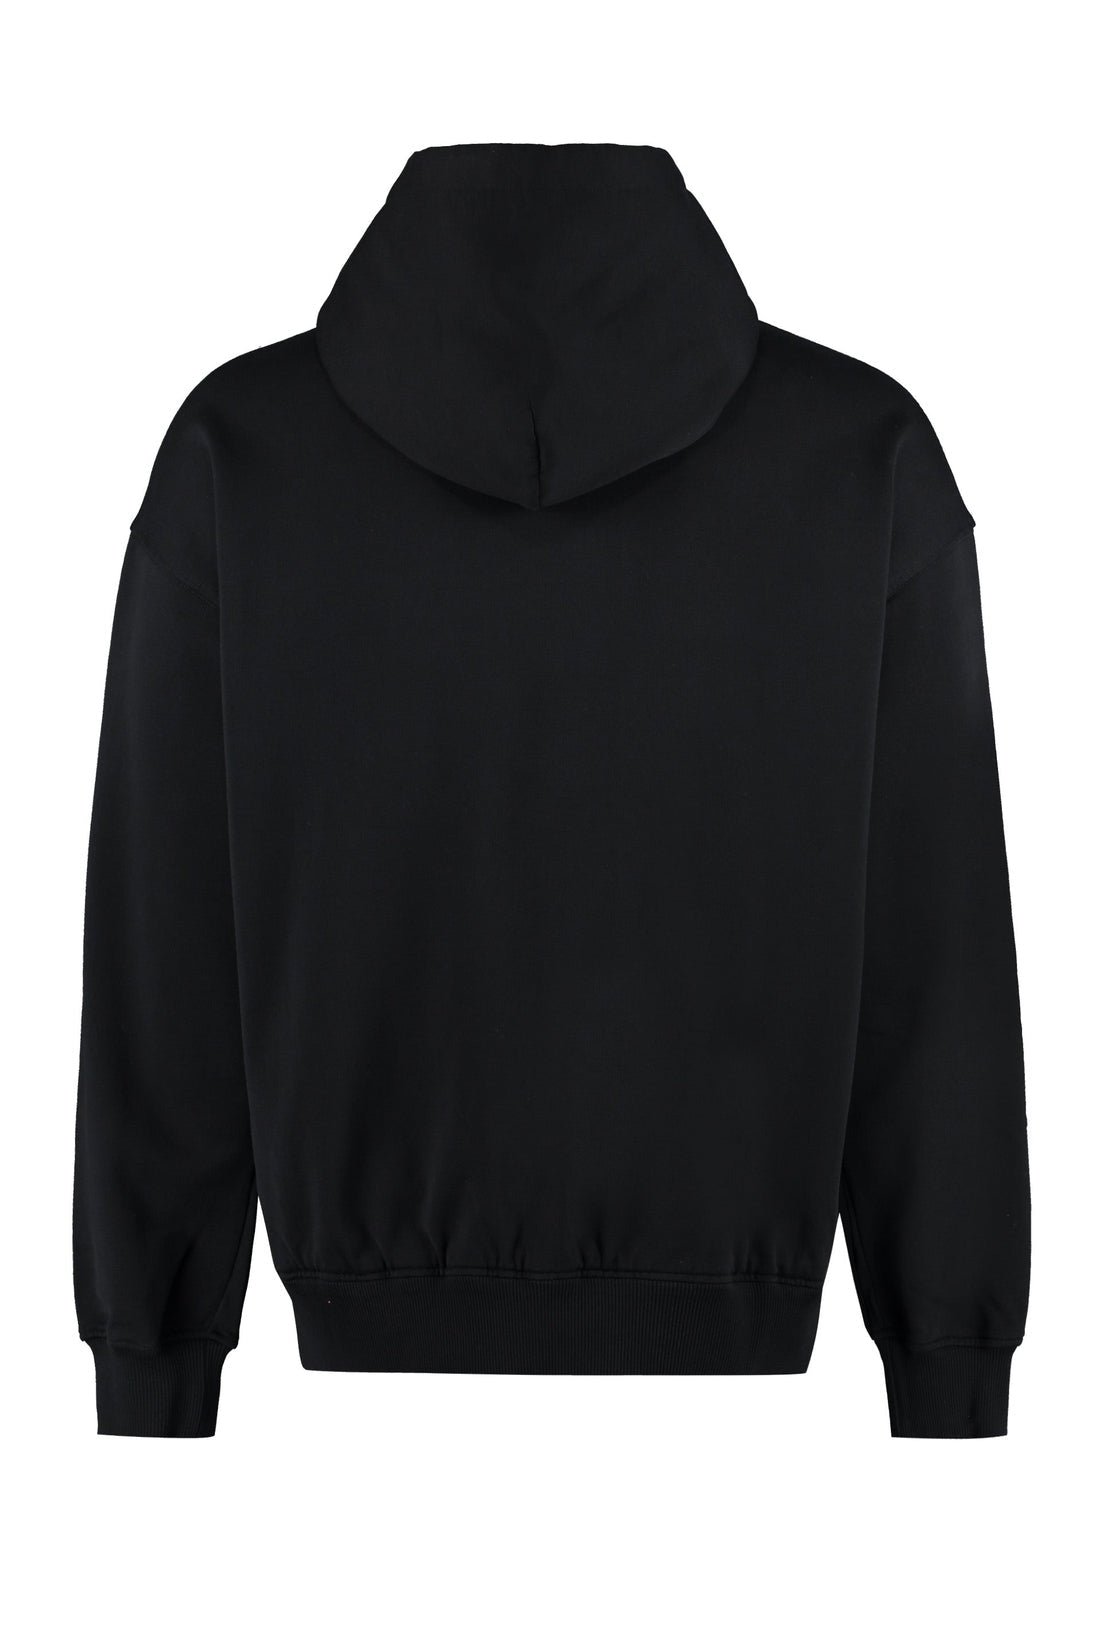 Dolce & Gabbana-OUTLET-SALE-Hooded sweatshirt-ARCHIVIST